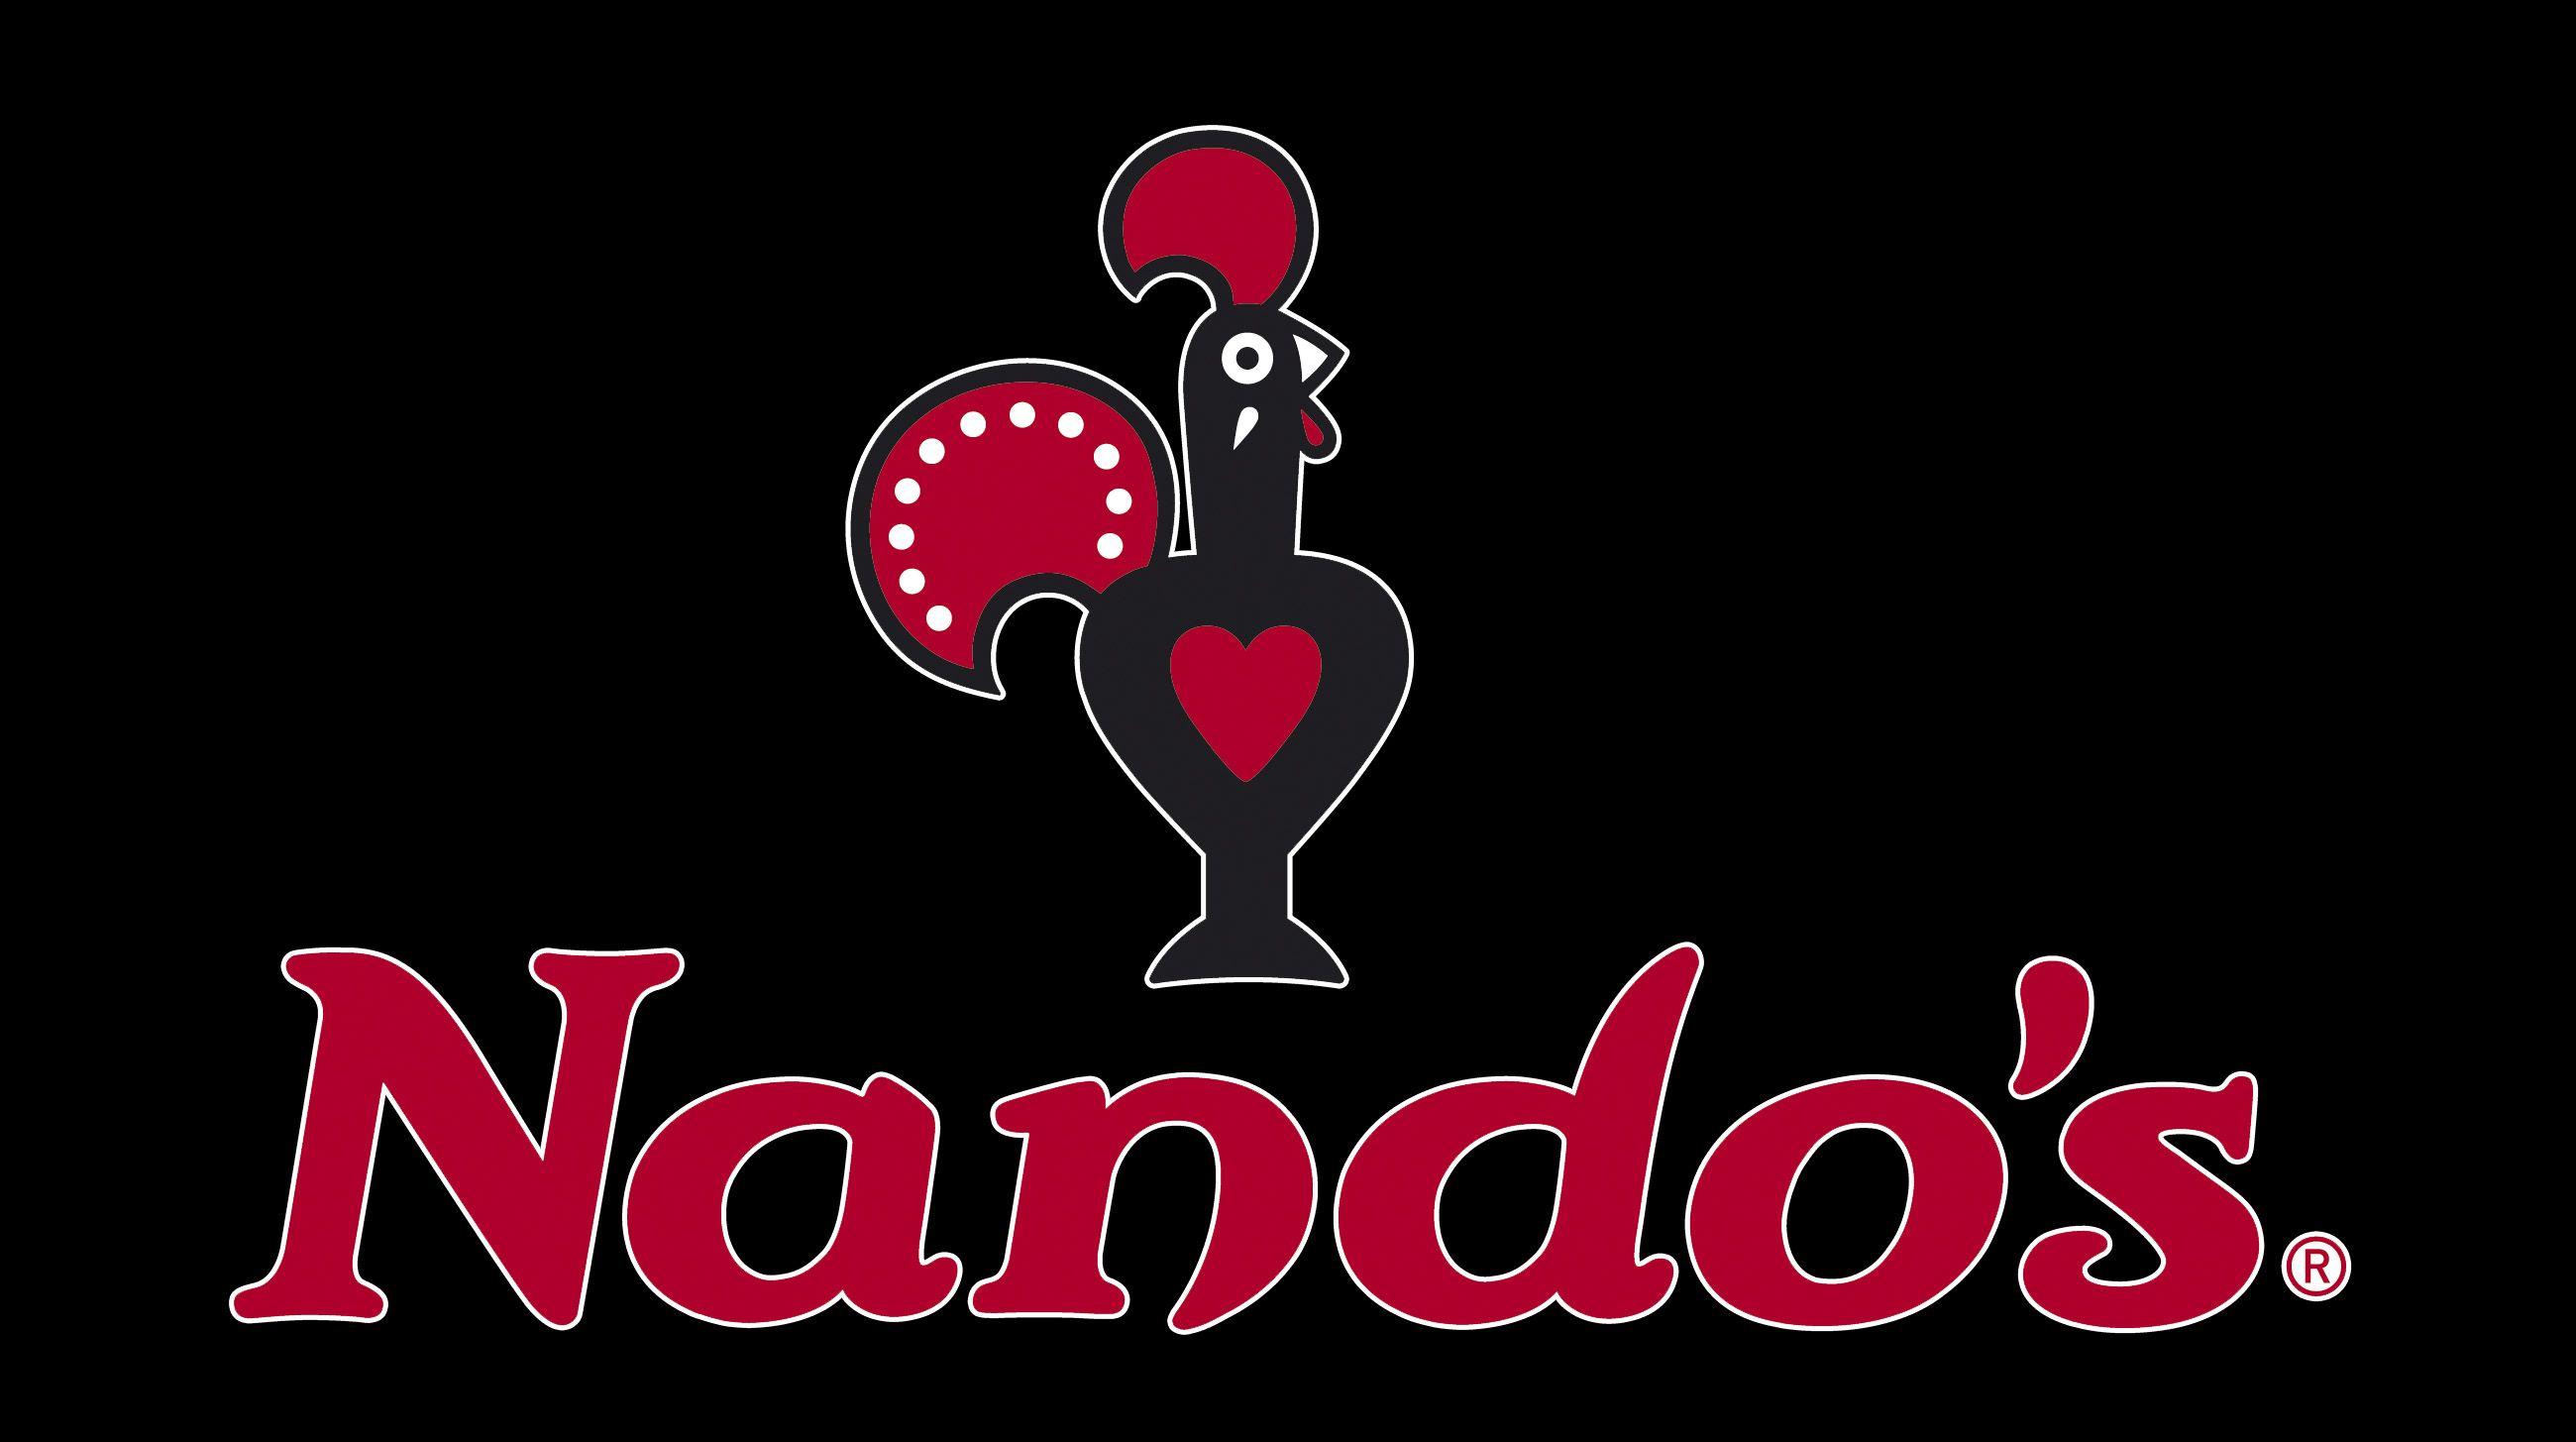 Nando's Logo - Nandos Logo, Nandos Symbol, Meaning, History and Evolution